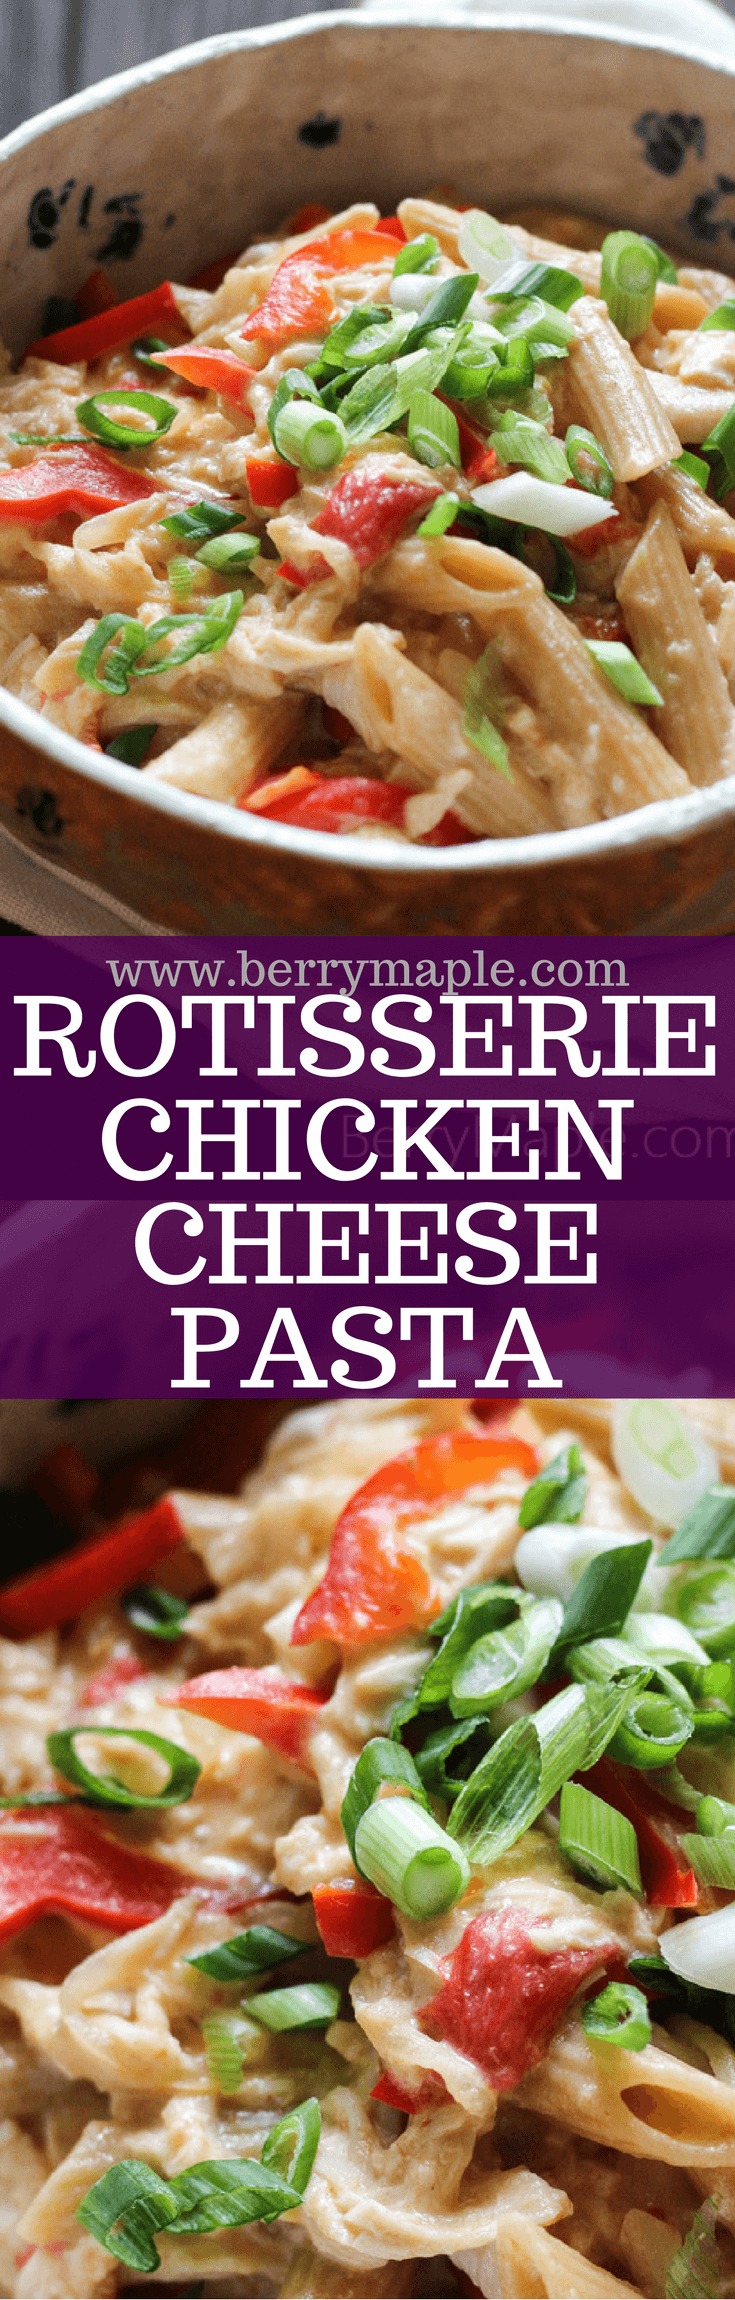 Rotisserie chicken cheese pasta recipe